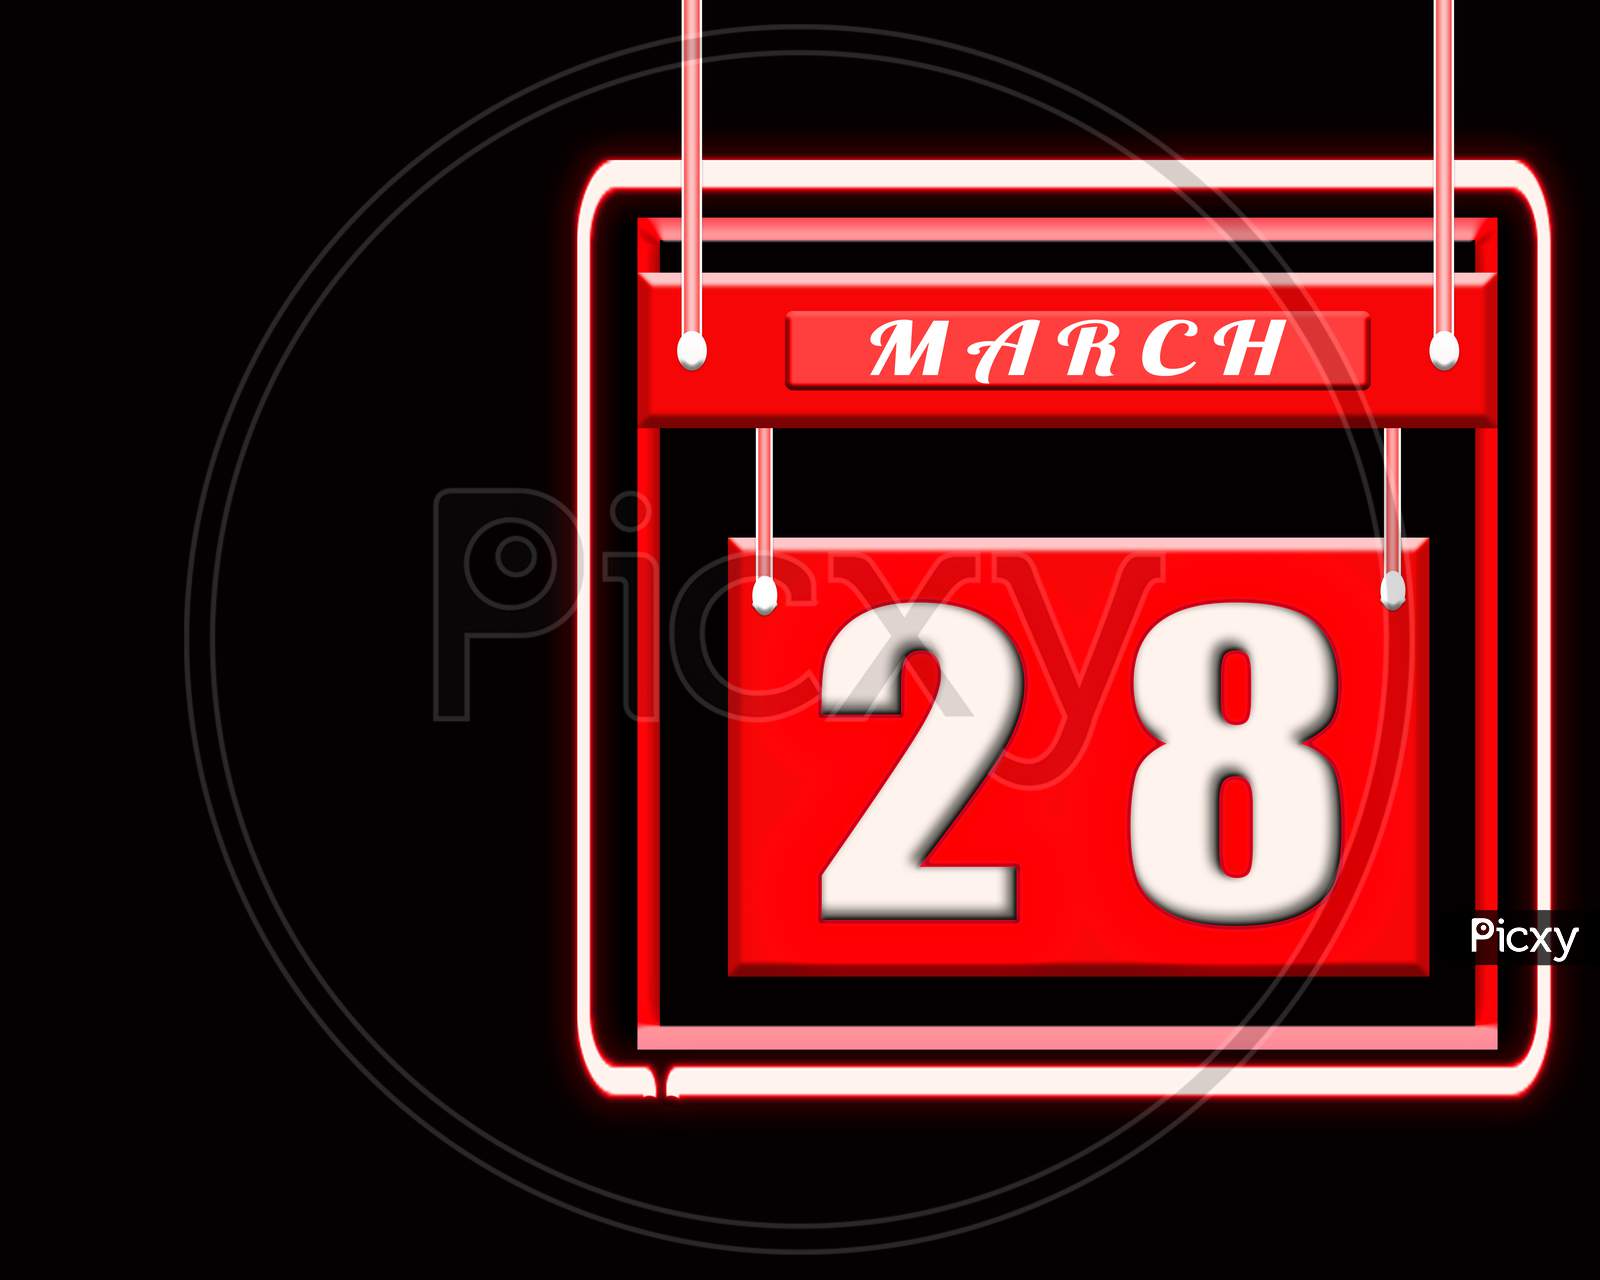 28 March, Red Calendar On Black Backgrand